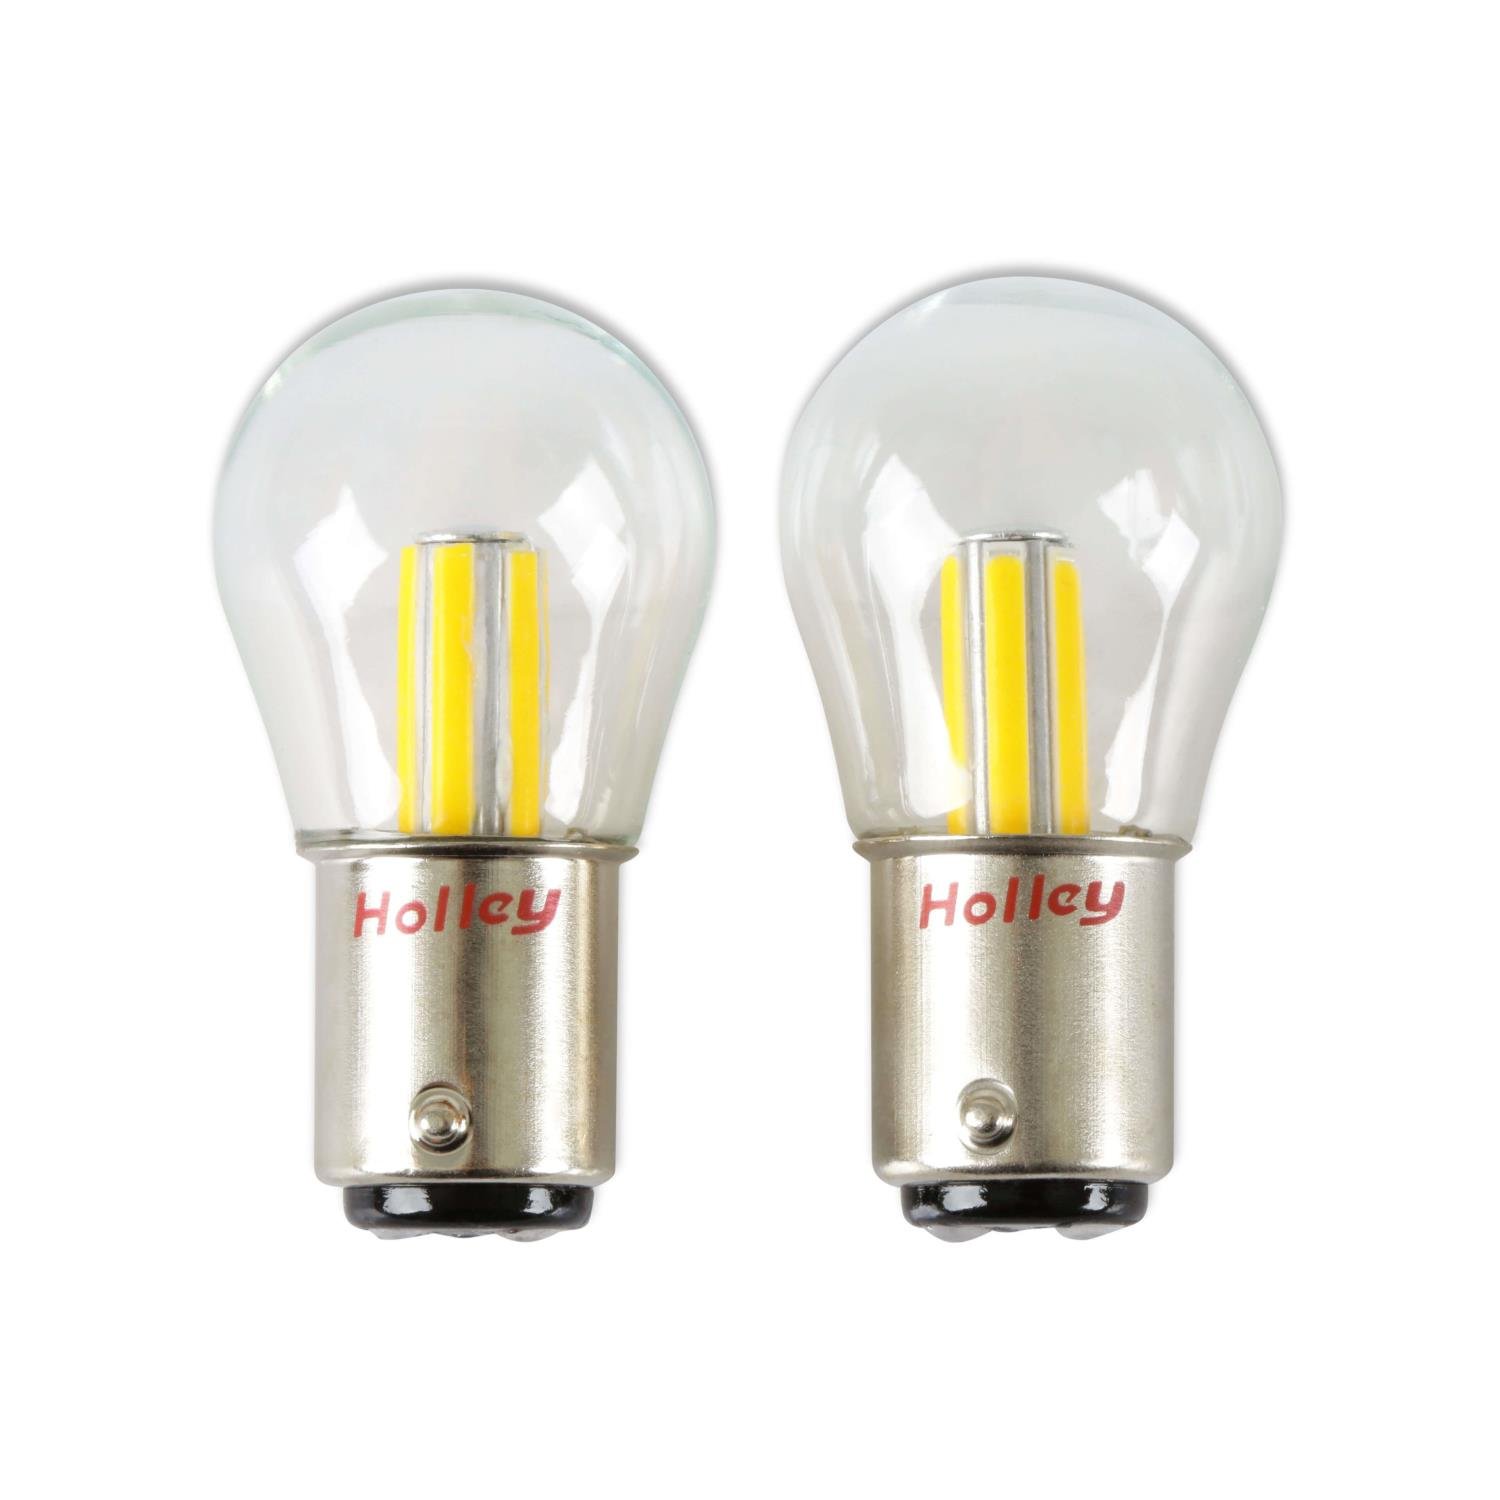 RetroBright LED 1157 Turn Signal / Parking Light Bulbs [Amber]